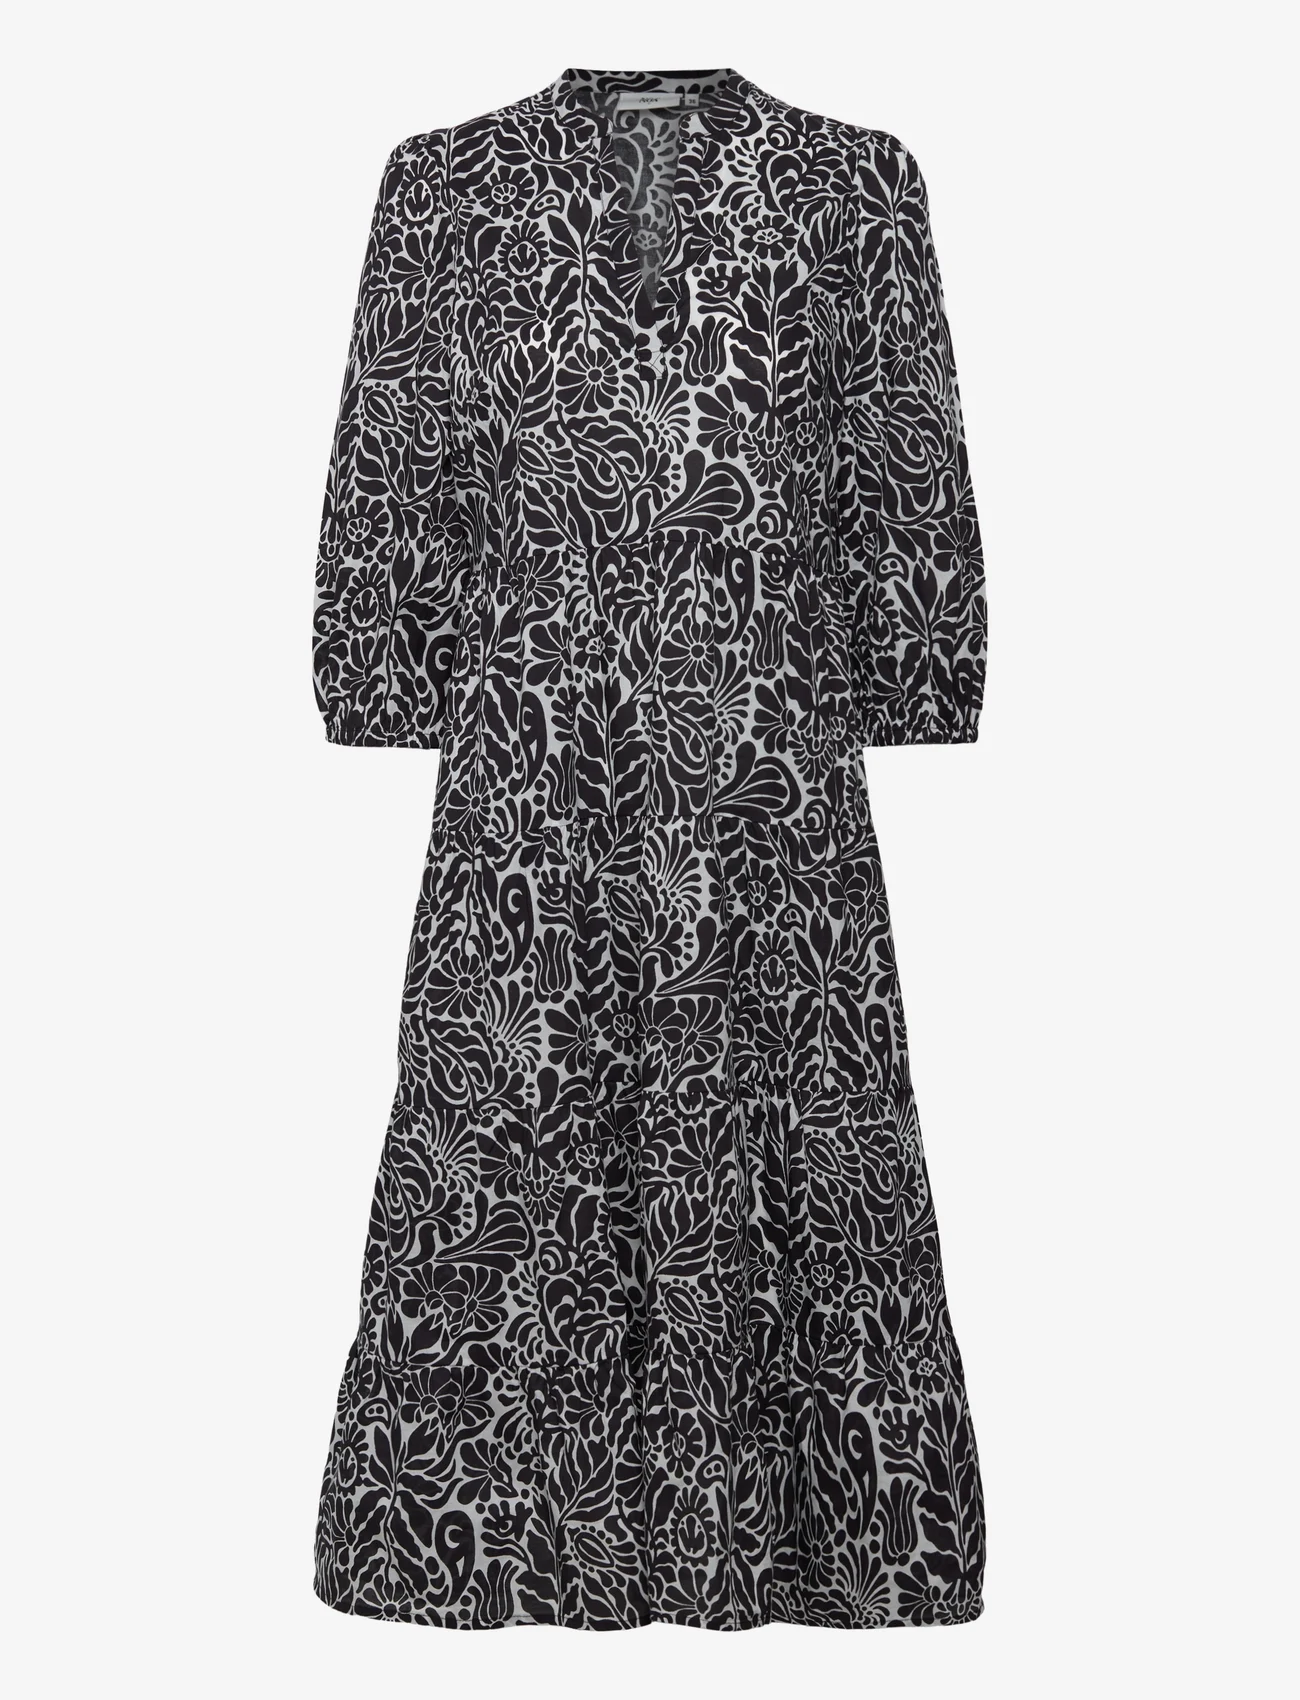 Noa Noa - AnnieNN Dress - särkkleidid - print black/white - 0